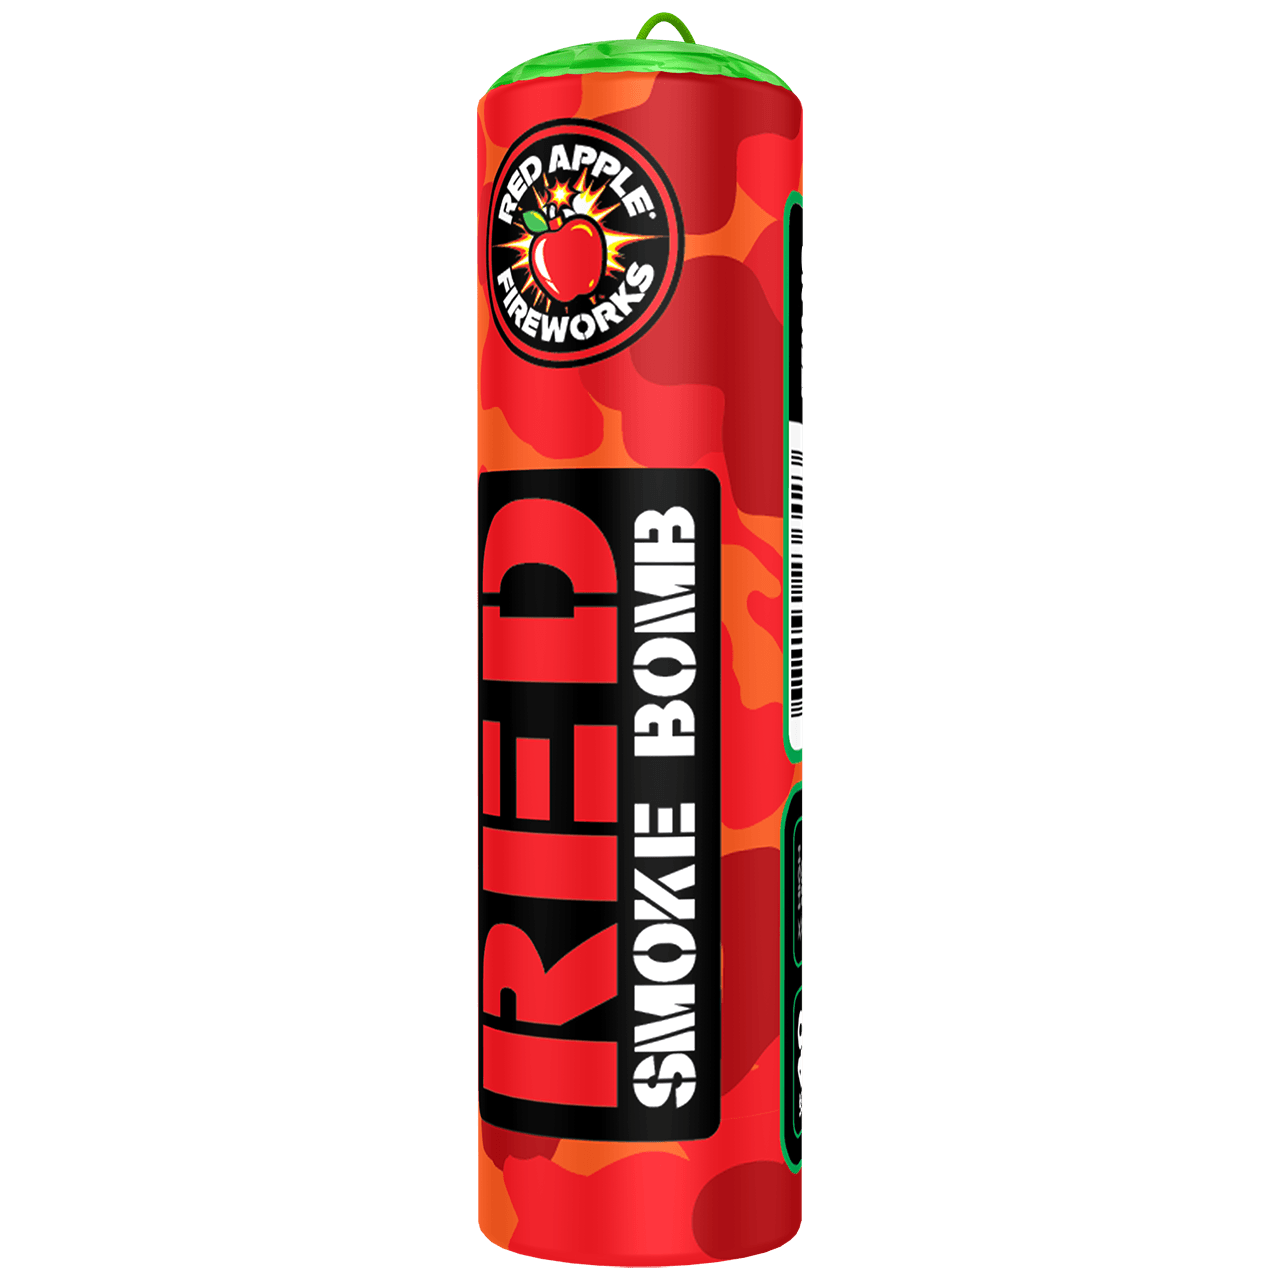 Red Apple® Smoke Bombs